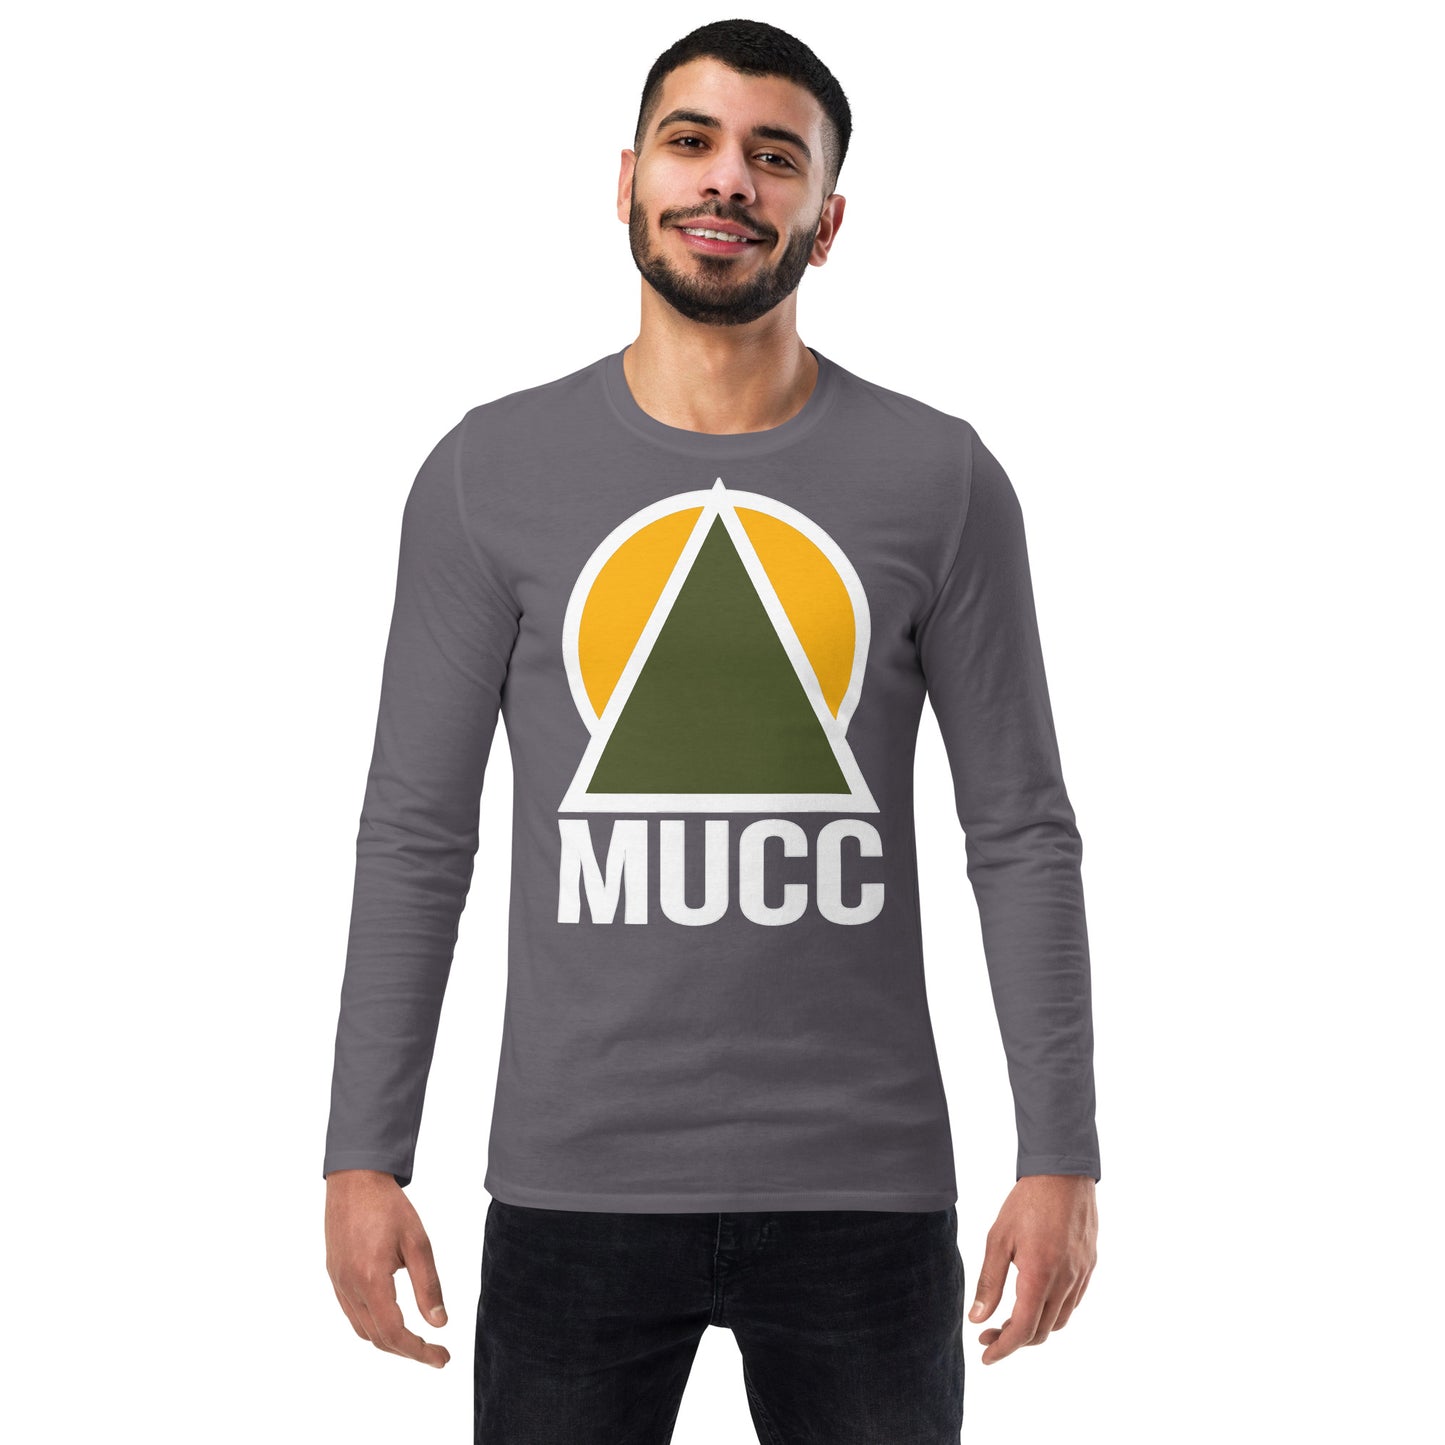 Unisex MUCC long sleeve shirt